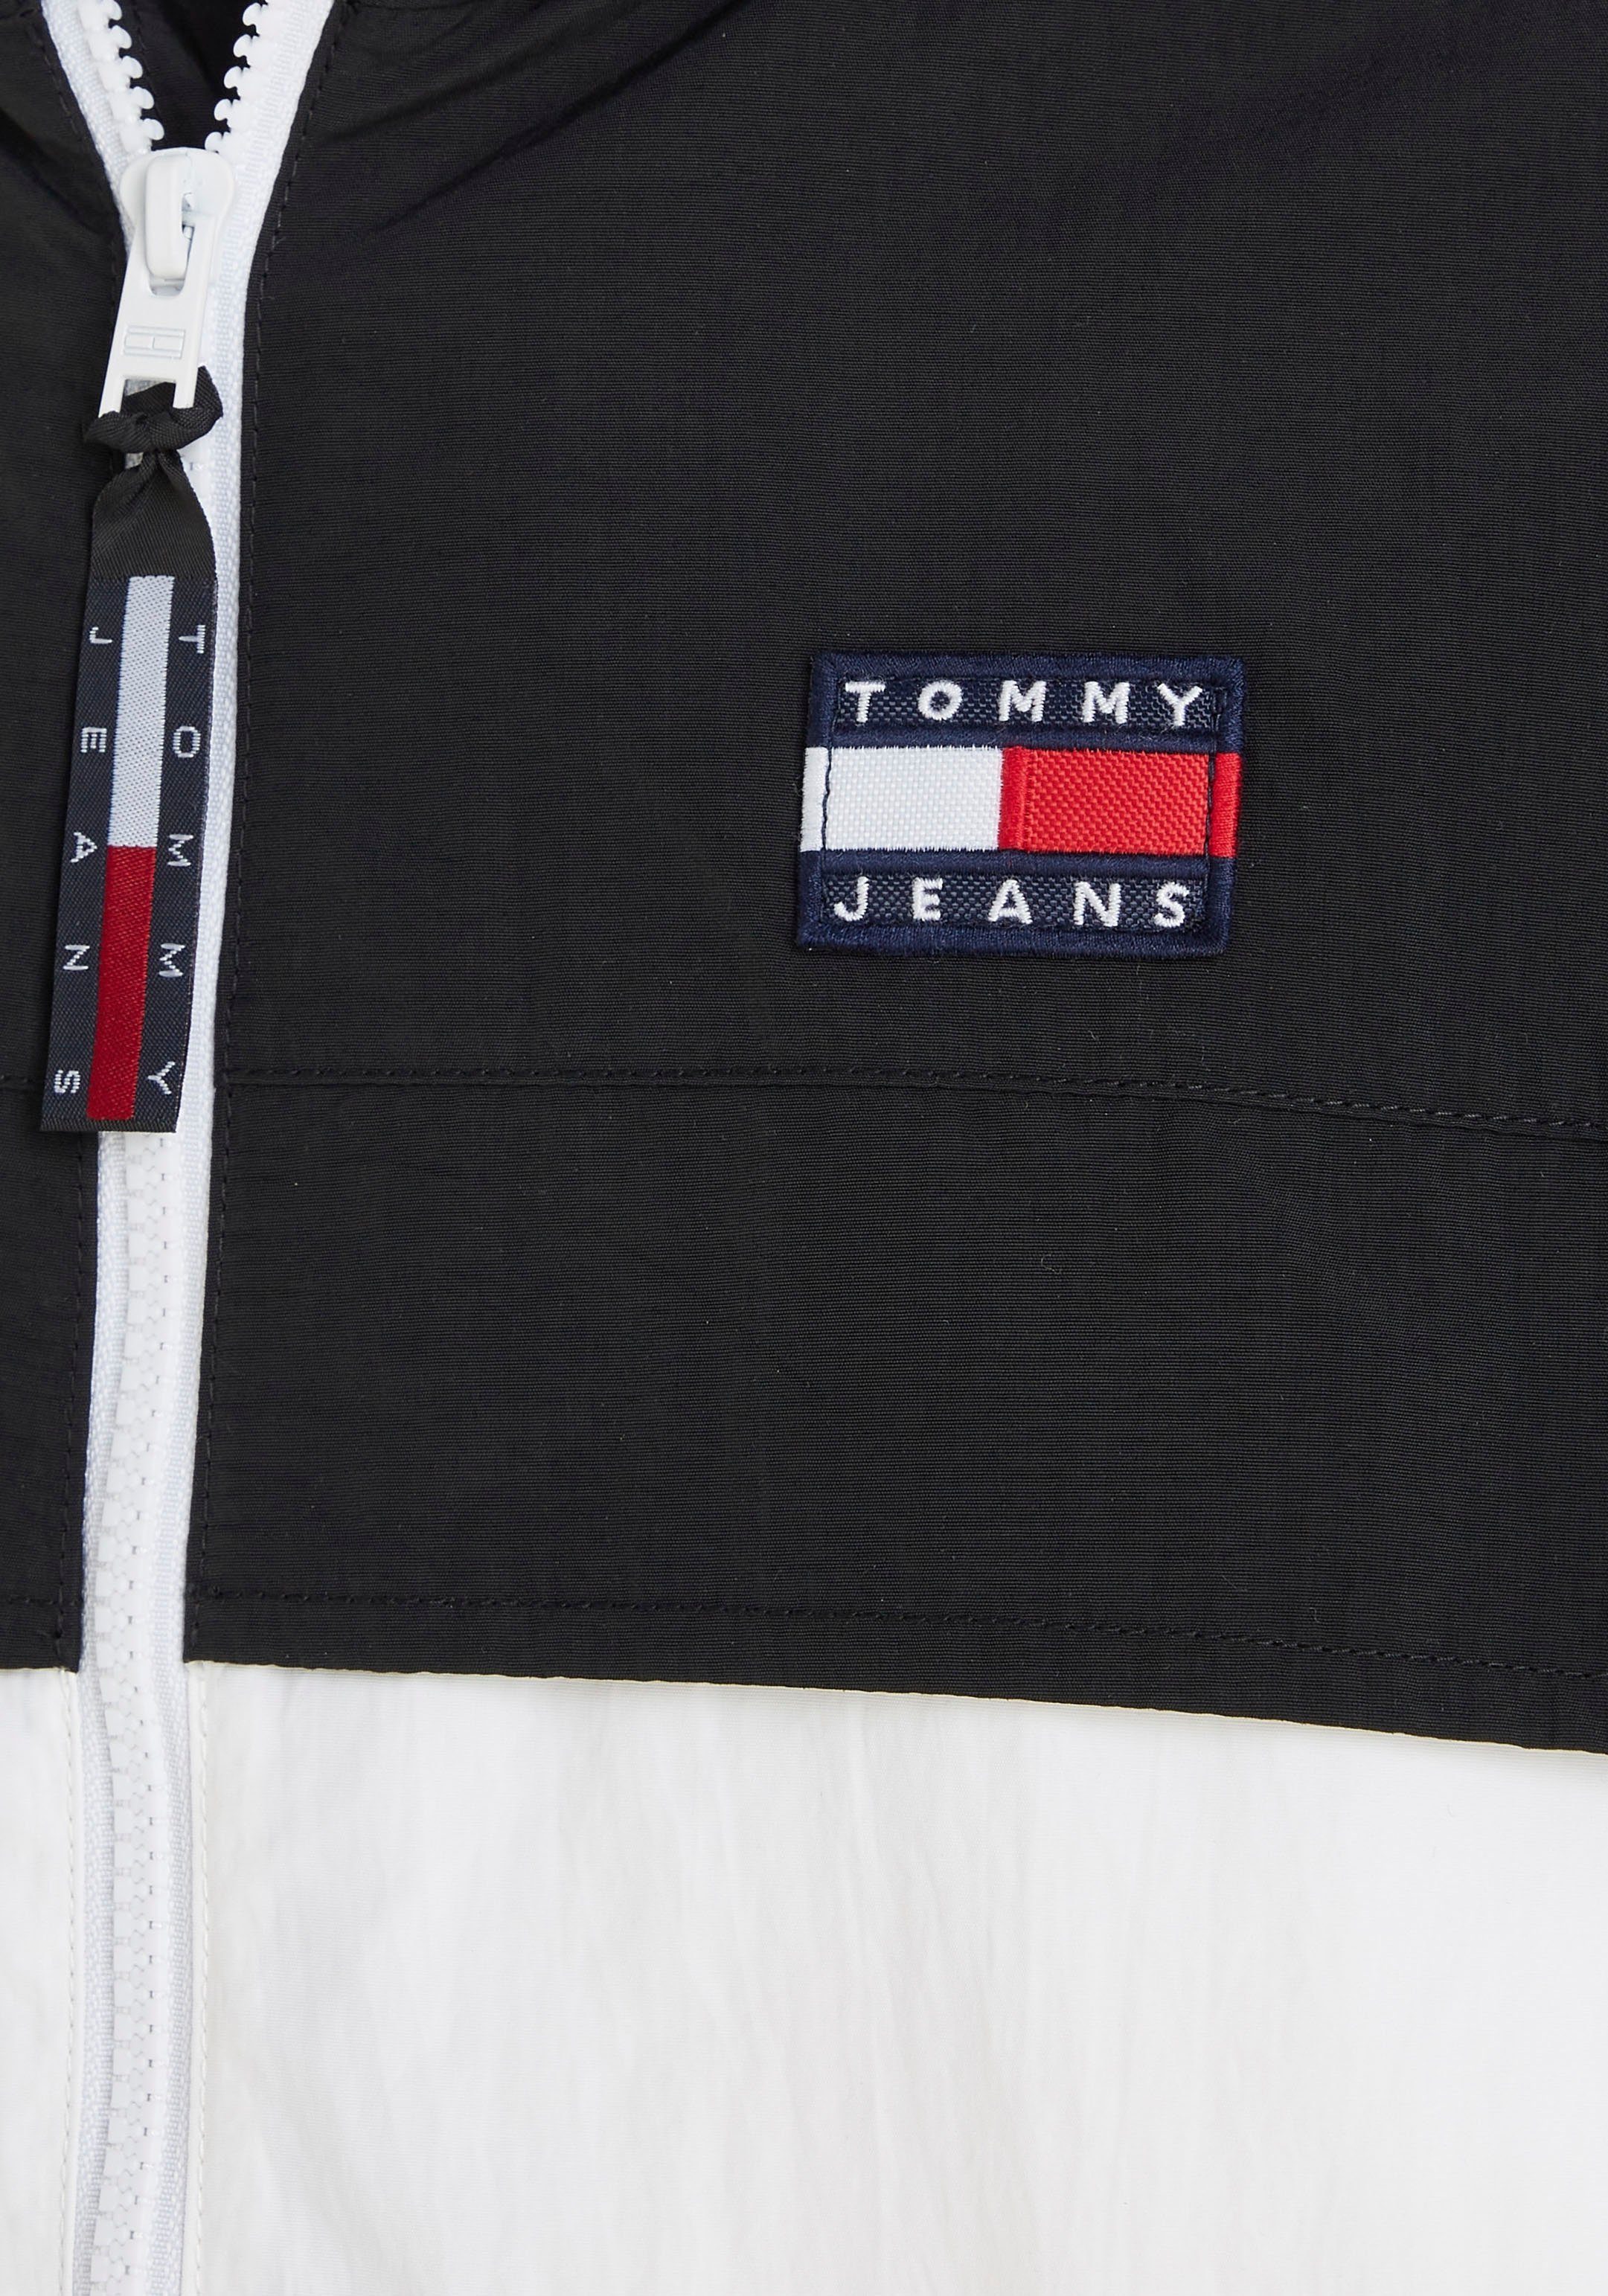 Tommy Jeans Windbreaker TJM CHICAGO im WINDBREAKER CLBK Black/DeepCrimson/White colorblocking Design